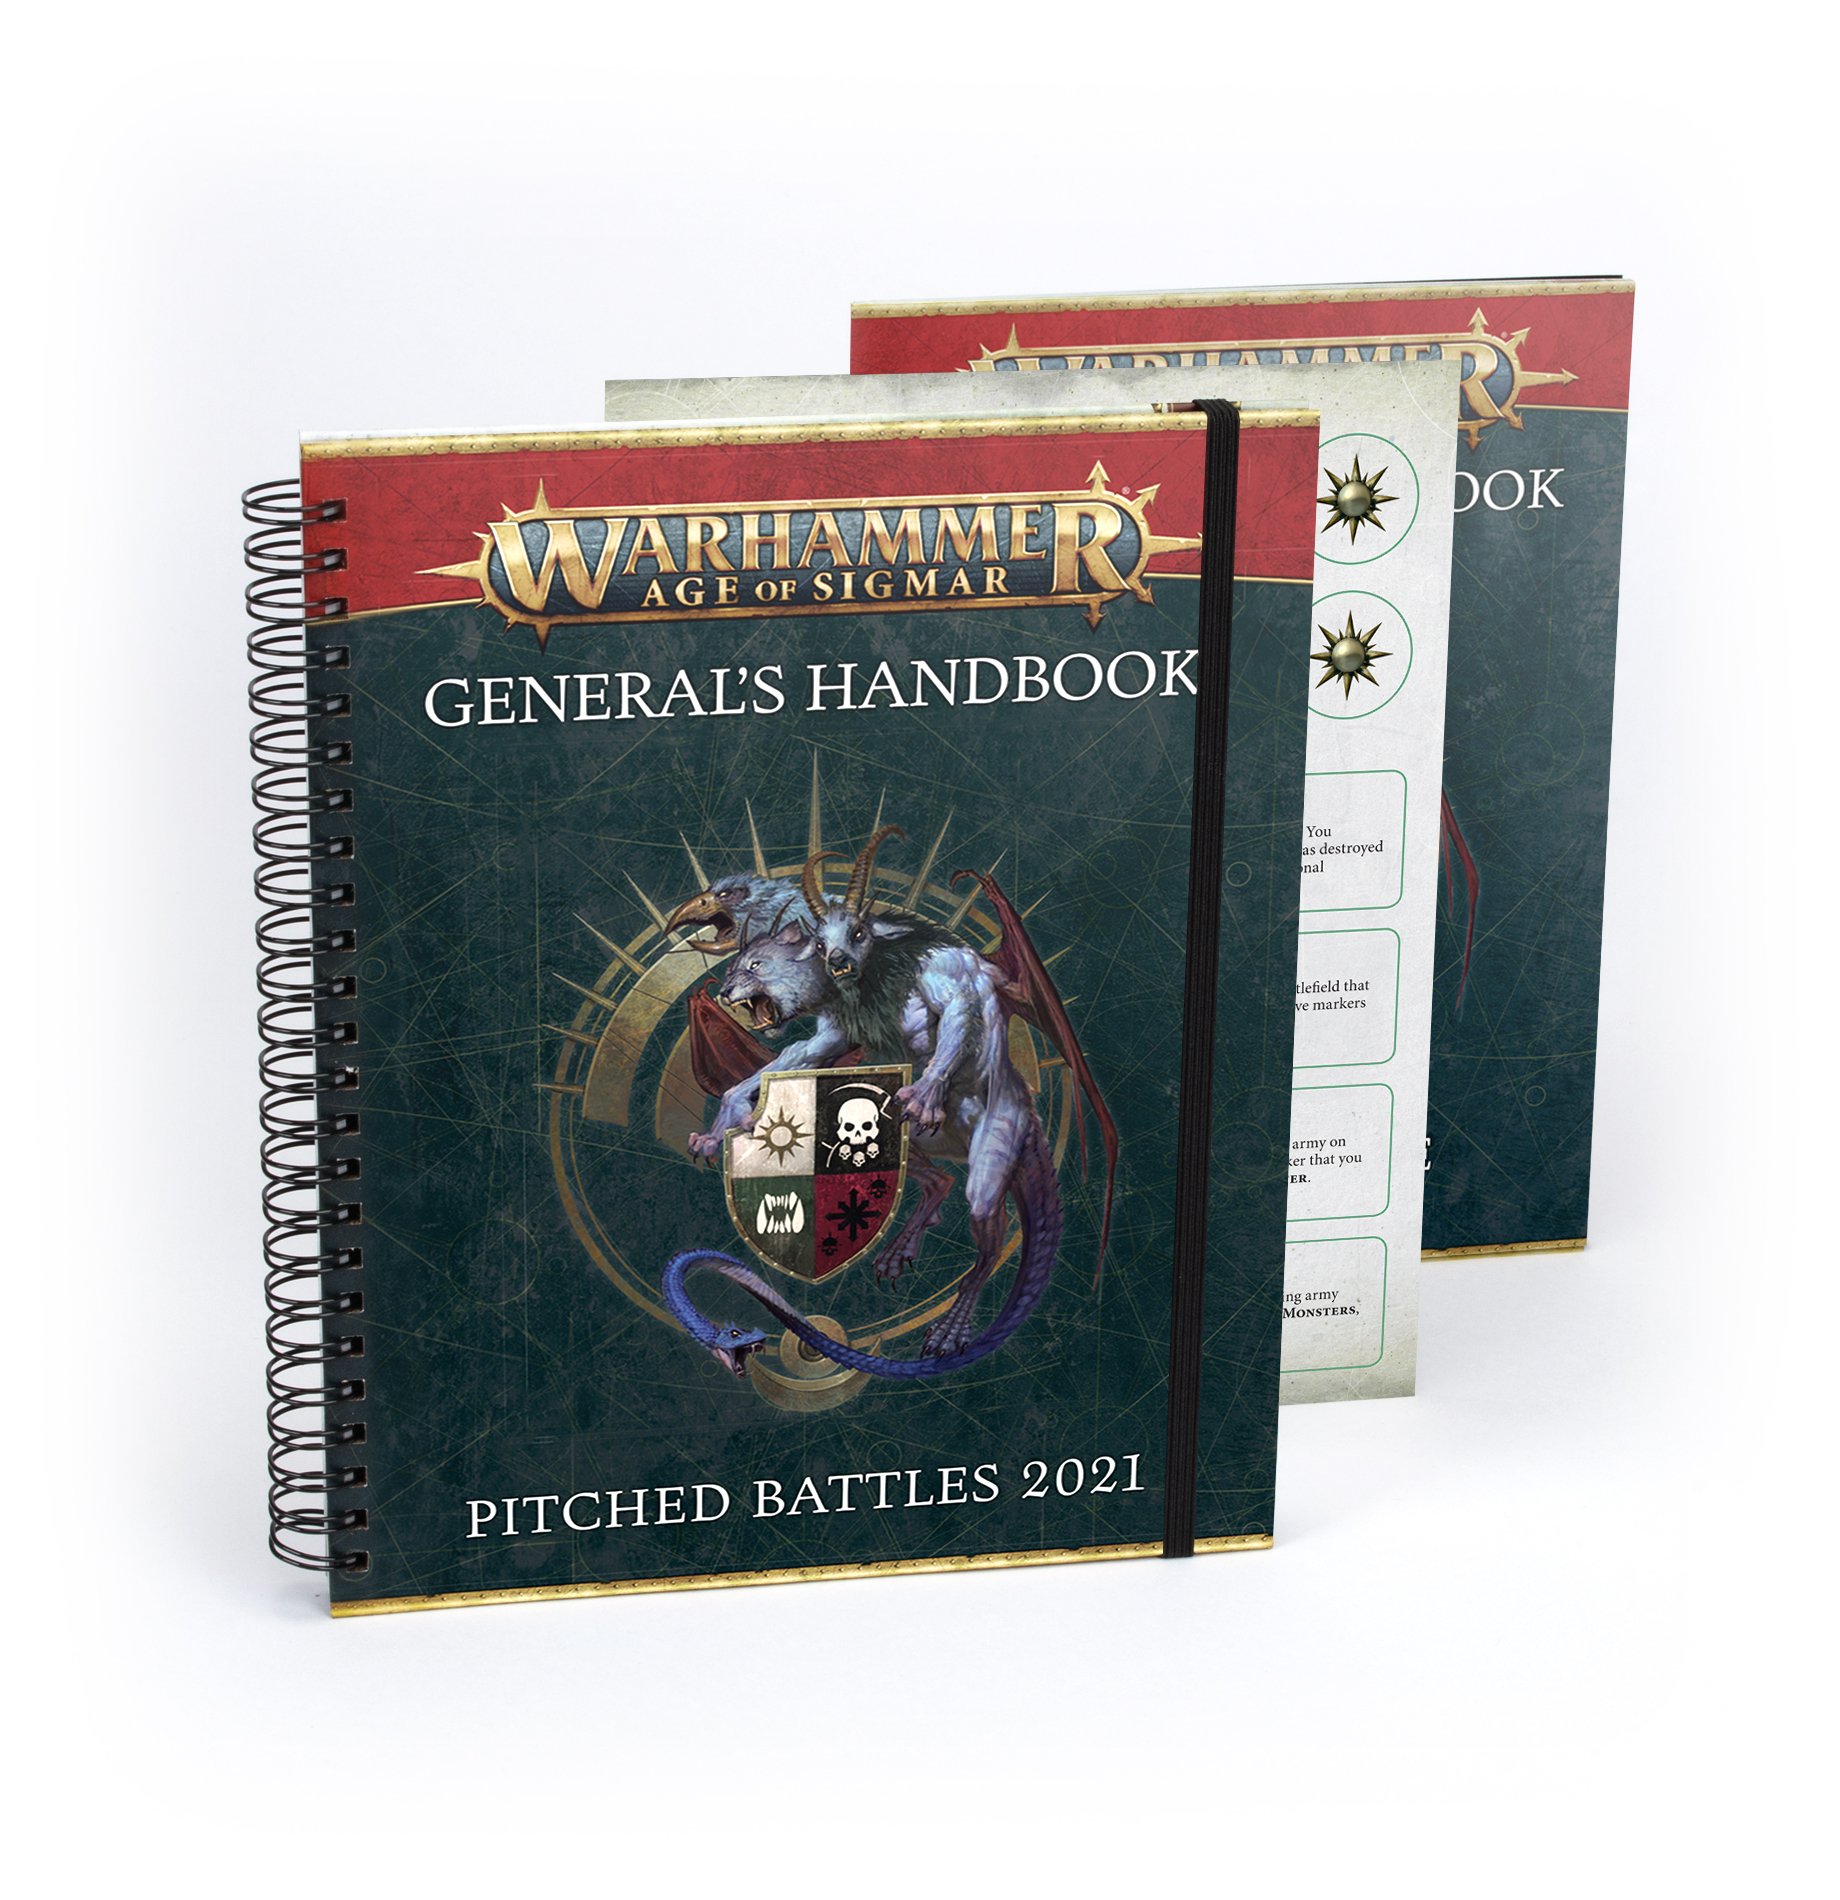 Warhammer Age of Sigmar: Generals Handbook: Pitched Battles 2021 (3rd Edition)  